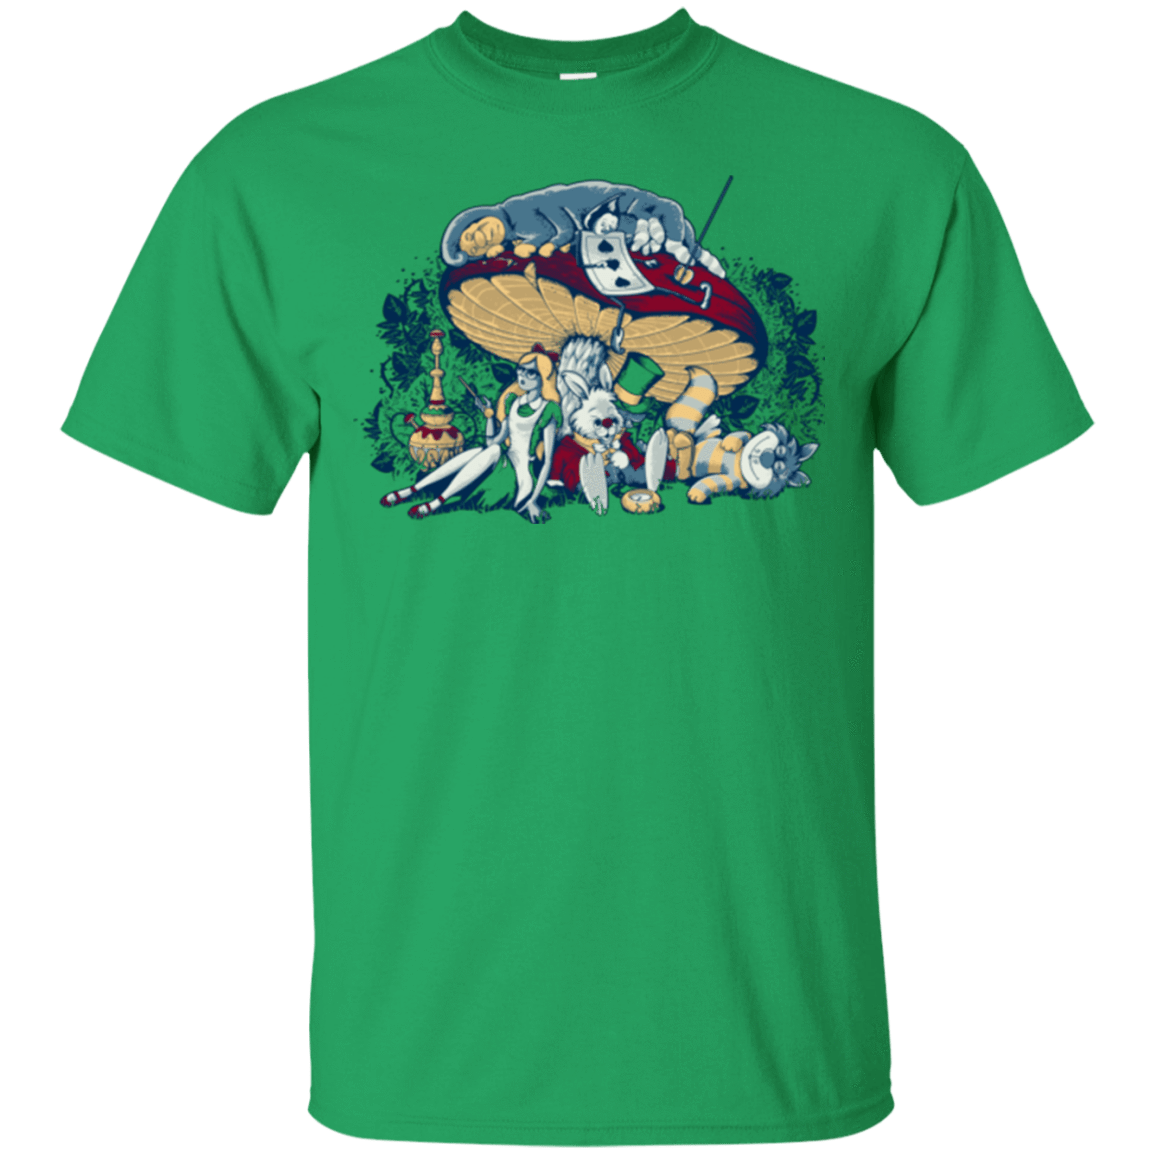 T-Shirts Irish Green / Small STONED IN WONDERLAND T-Shirt